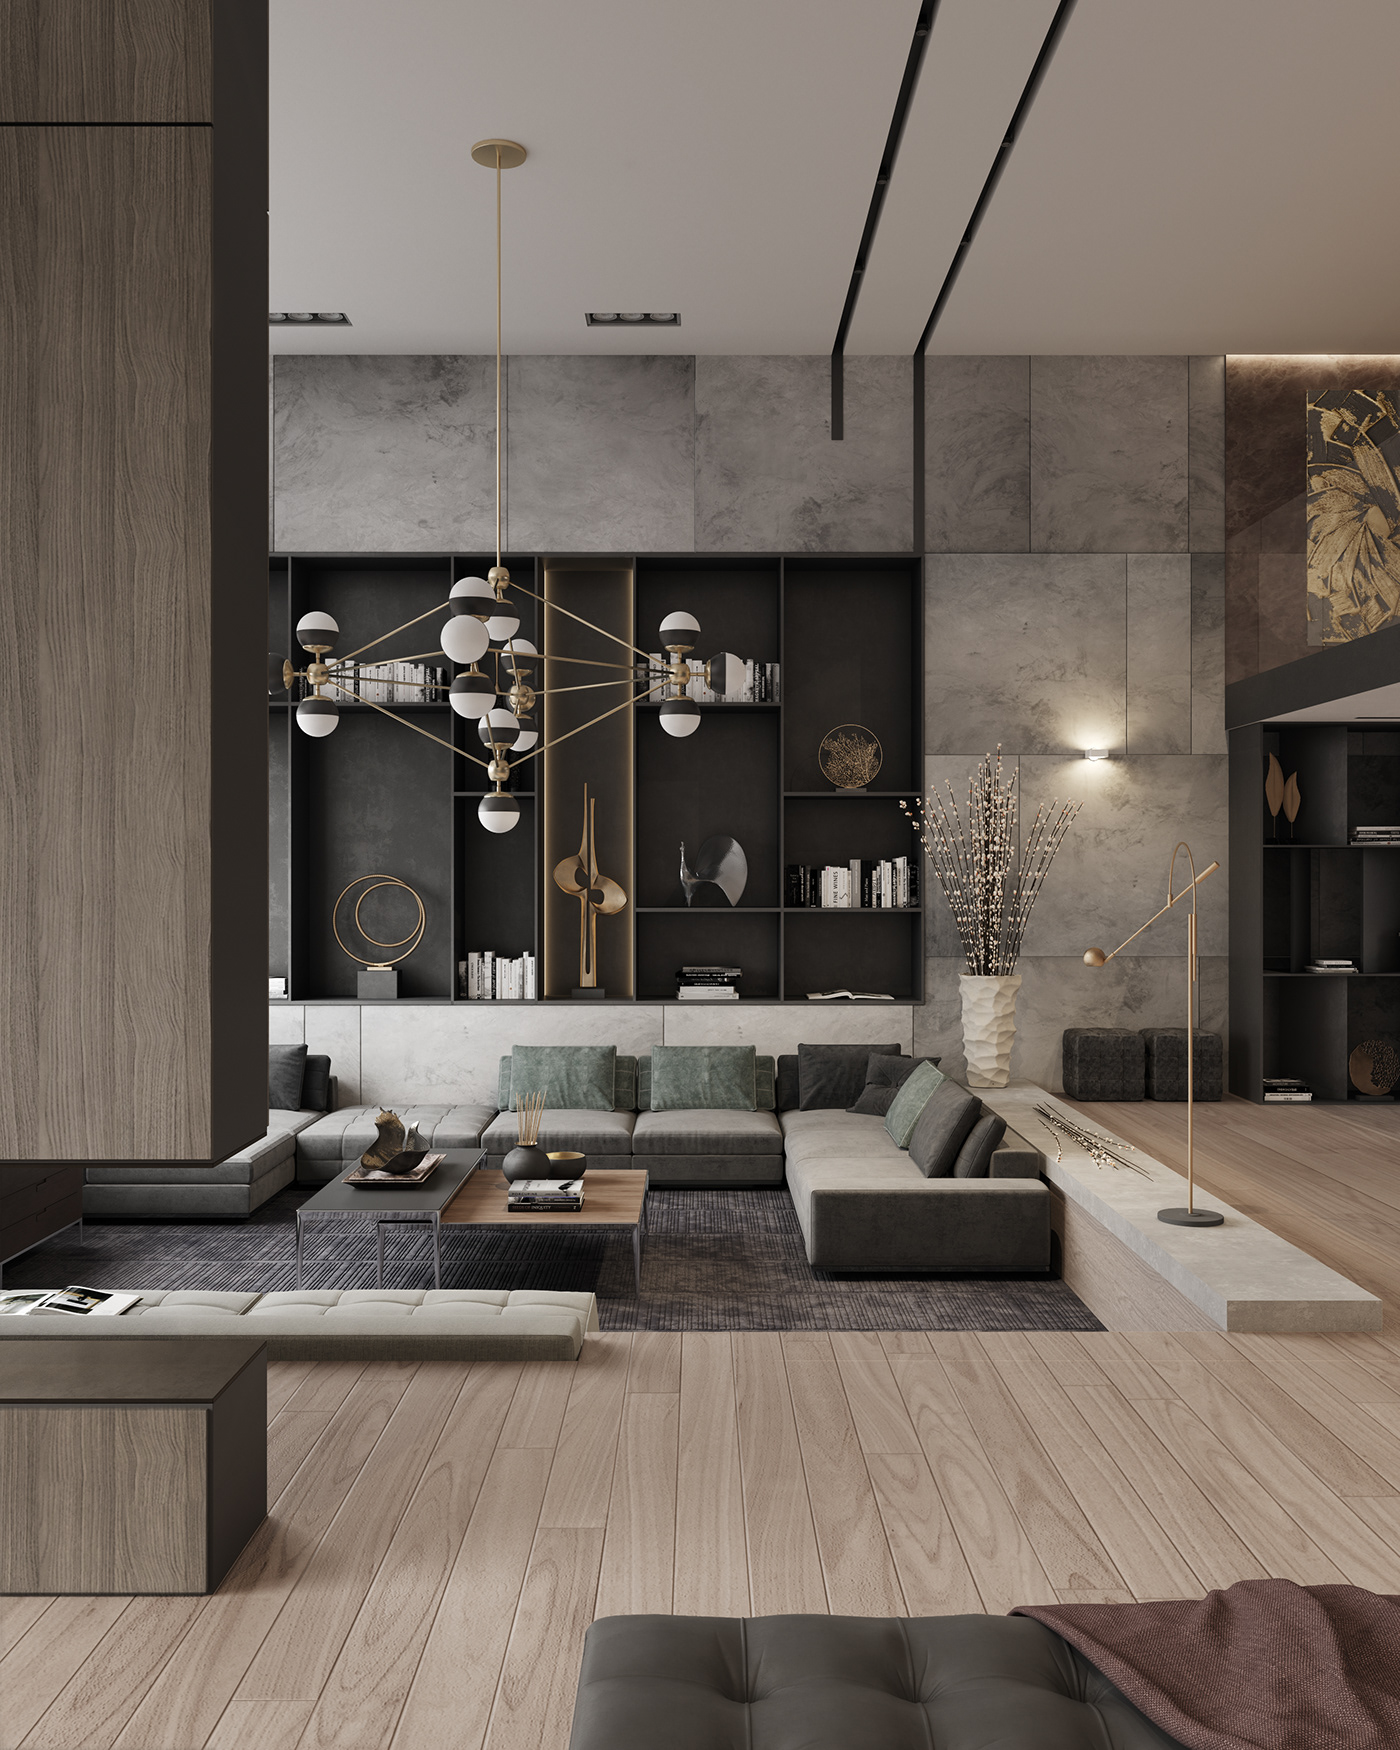 3ds max architecture contemporary design designer housedesign houseproject Interior interiorarchitecture milan